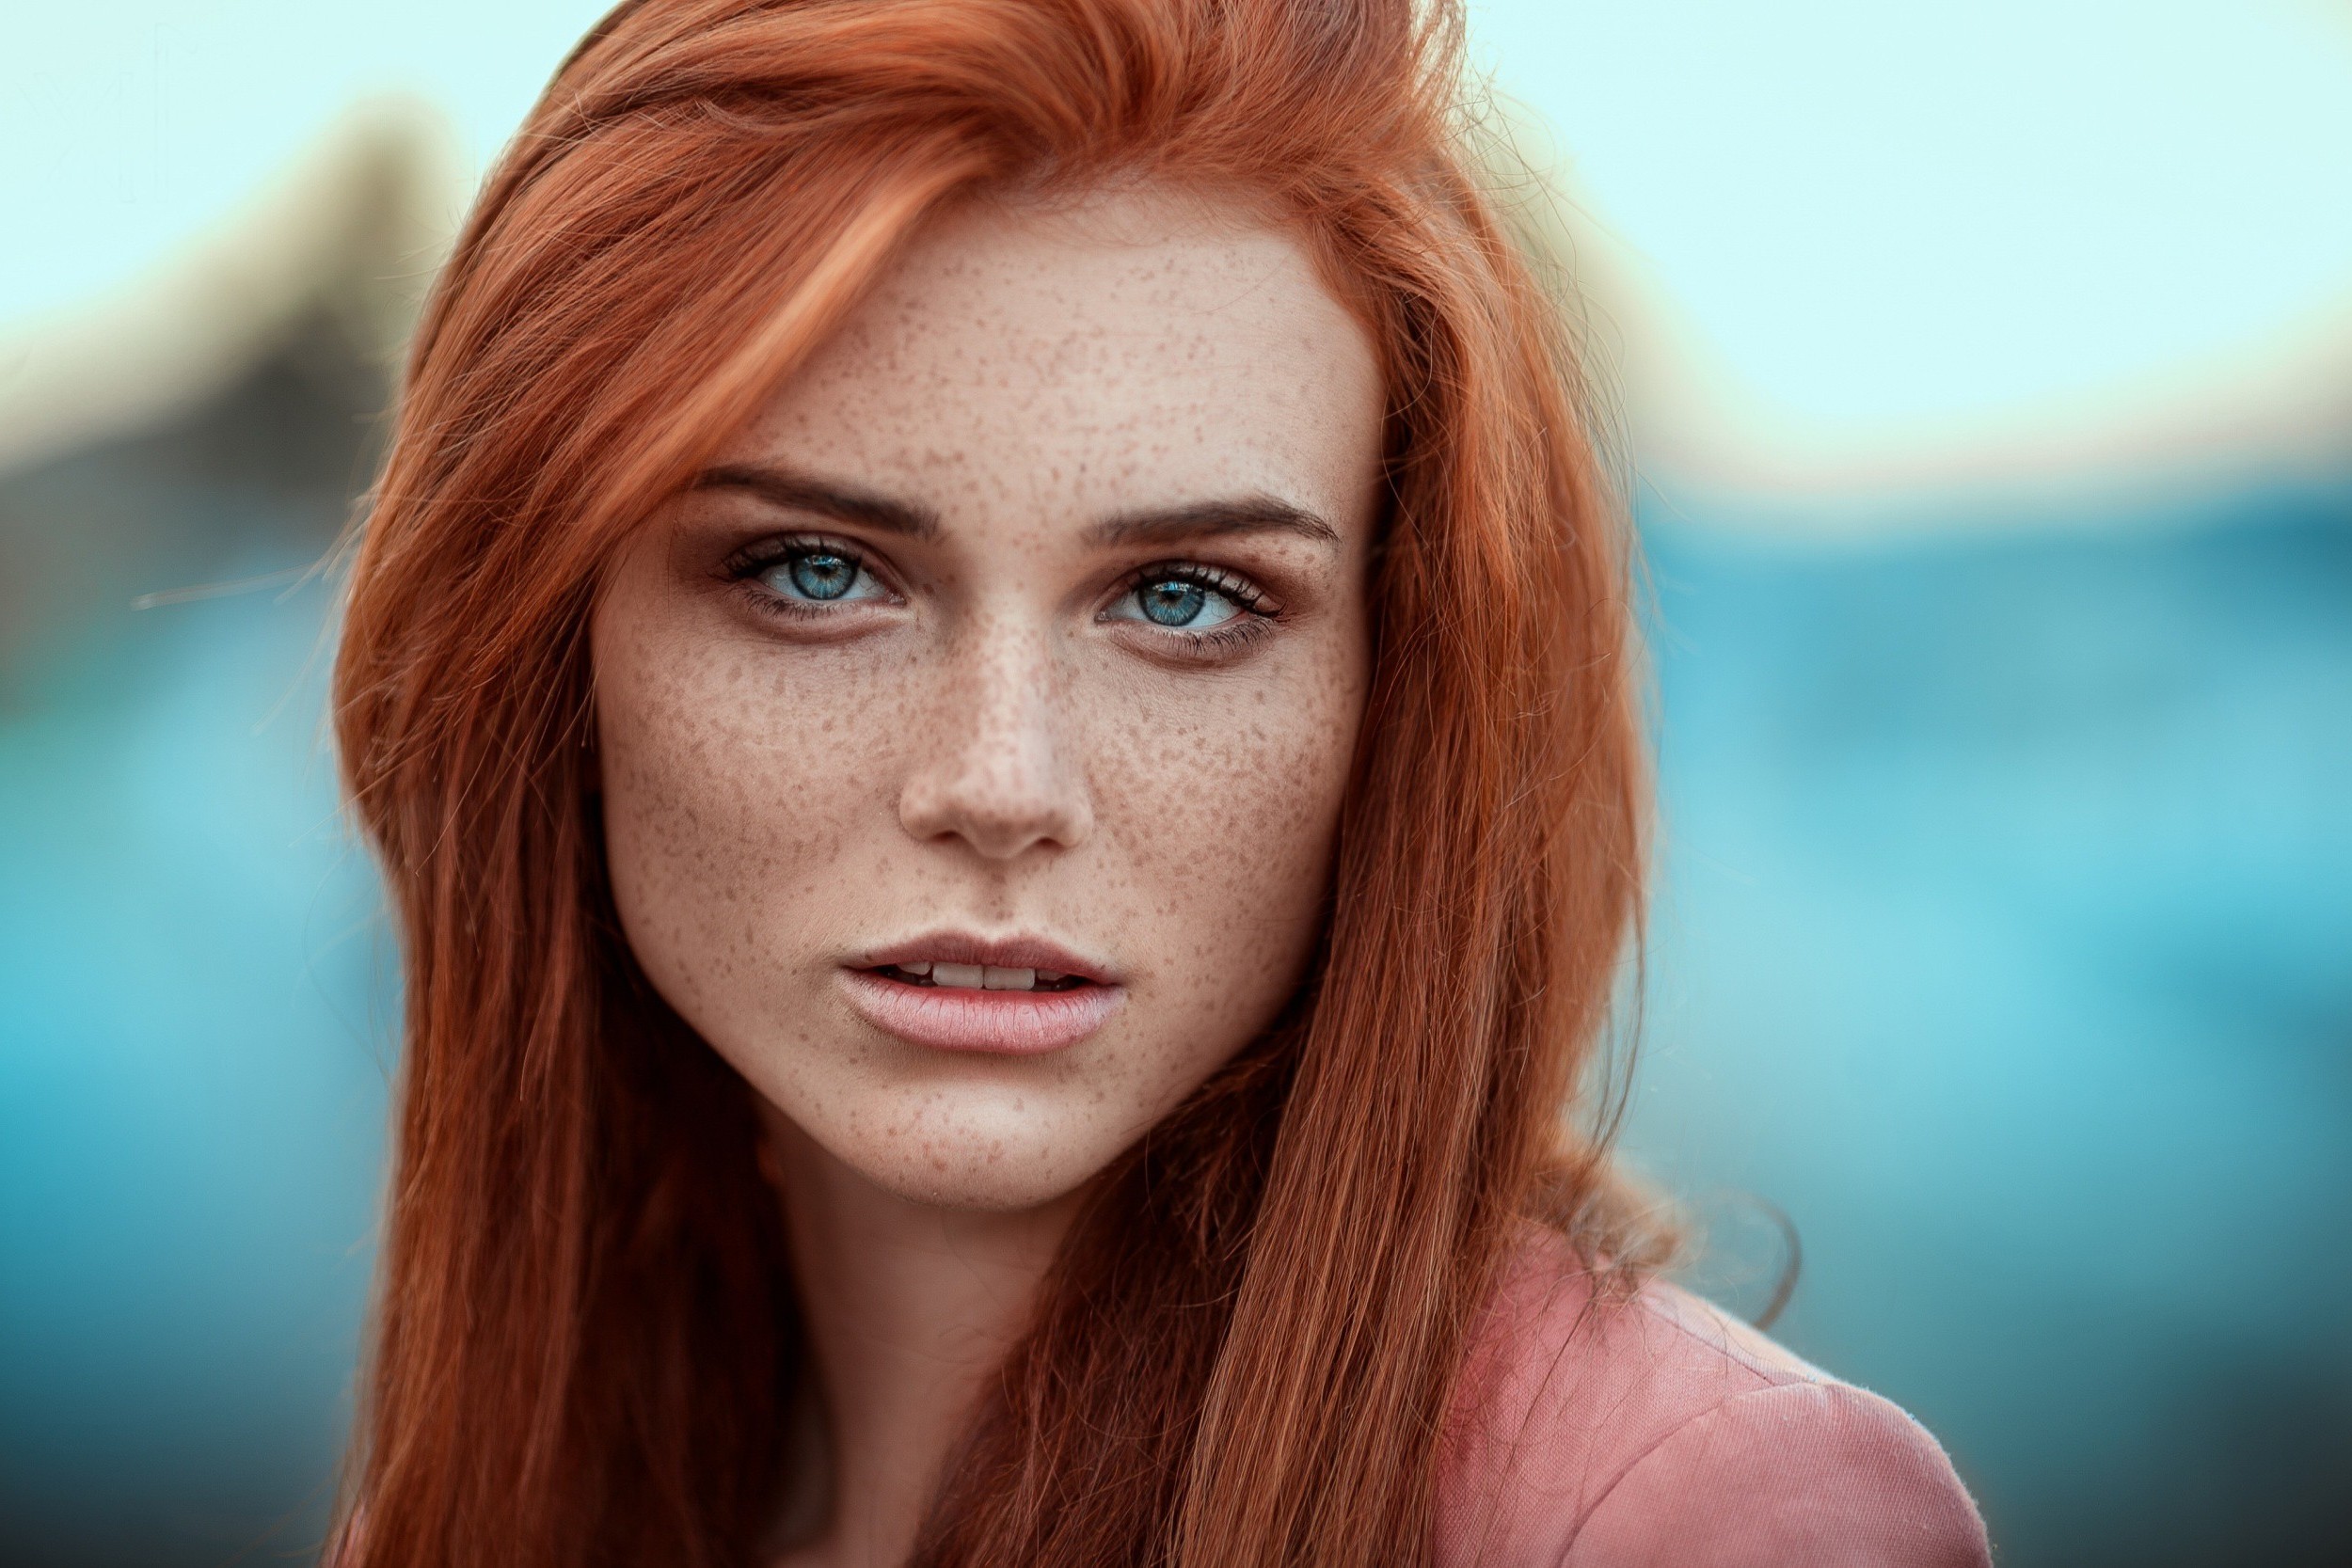 Download Freckles Depth Of Field Blue Eyes Redhead Model Woman Face Hd Wallpaper 0199